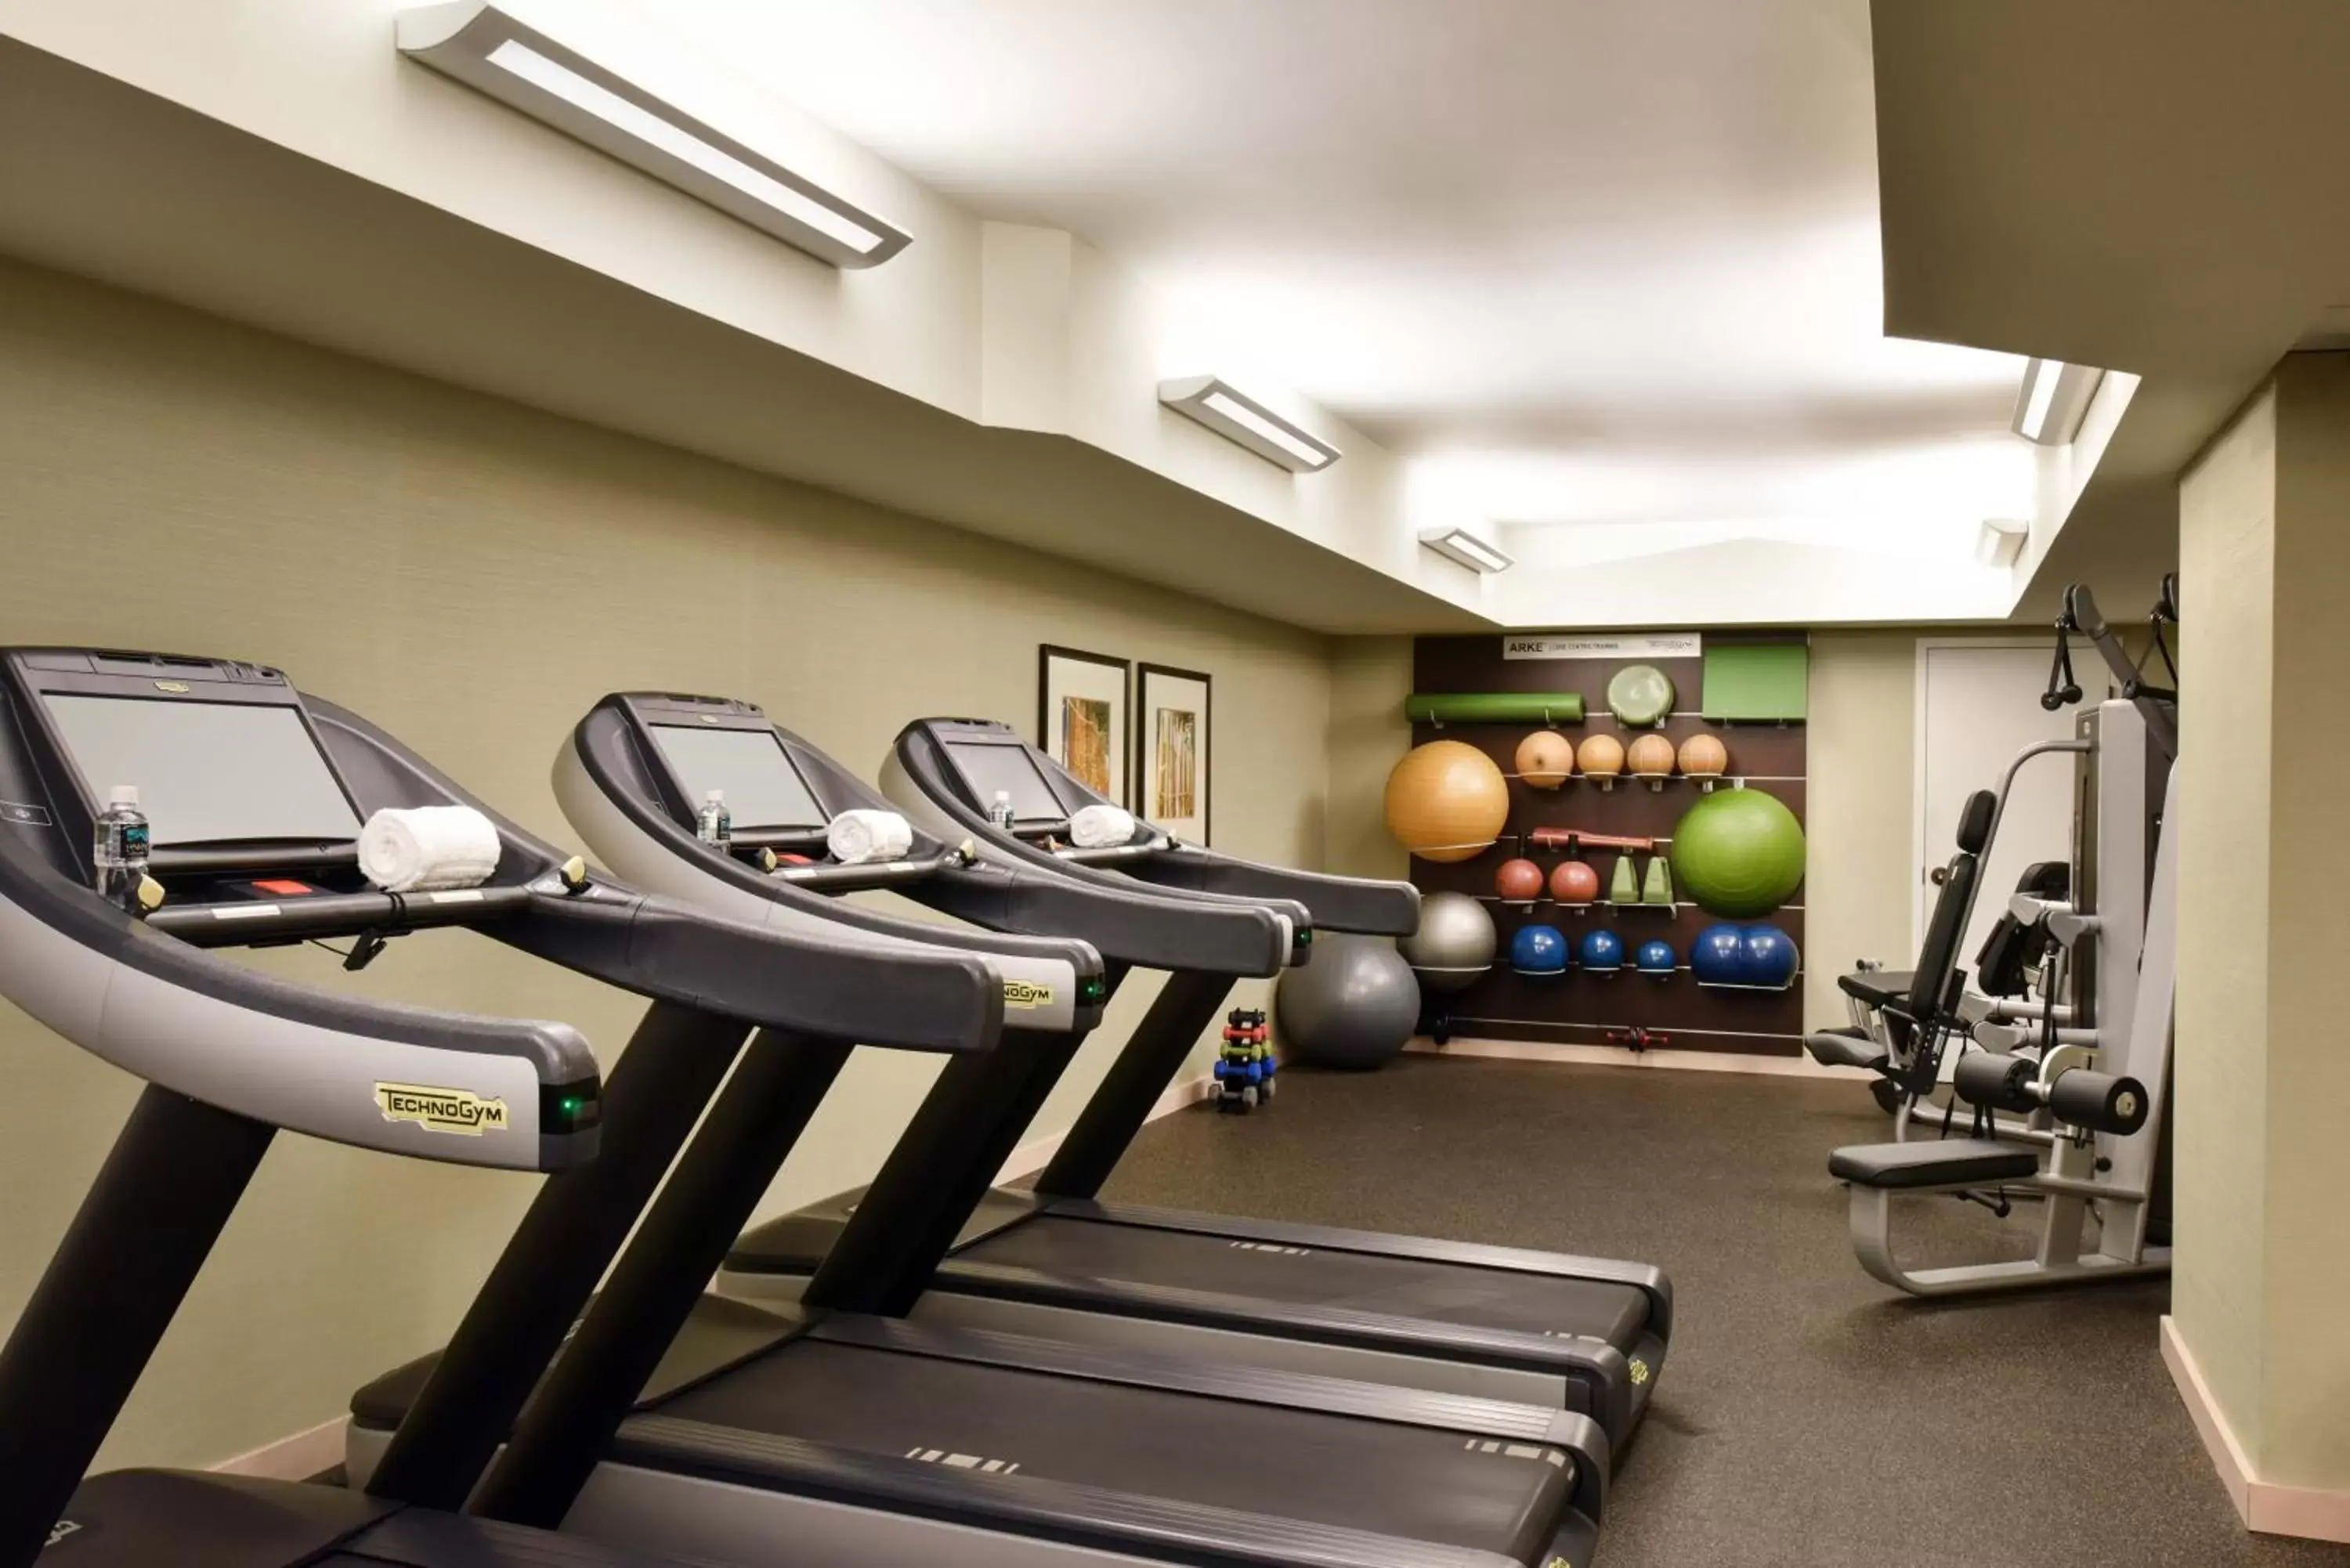 Fitness centre/facilities, Fitness Center/Facilities in Trump International Hotel Waikiki